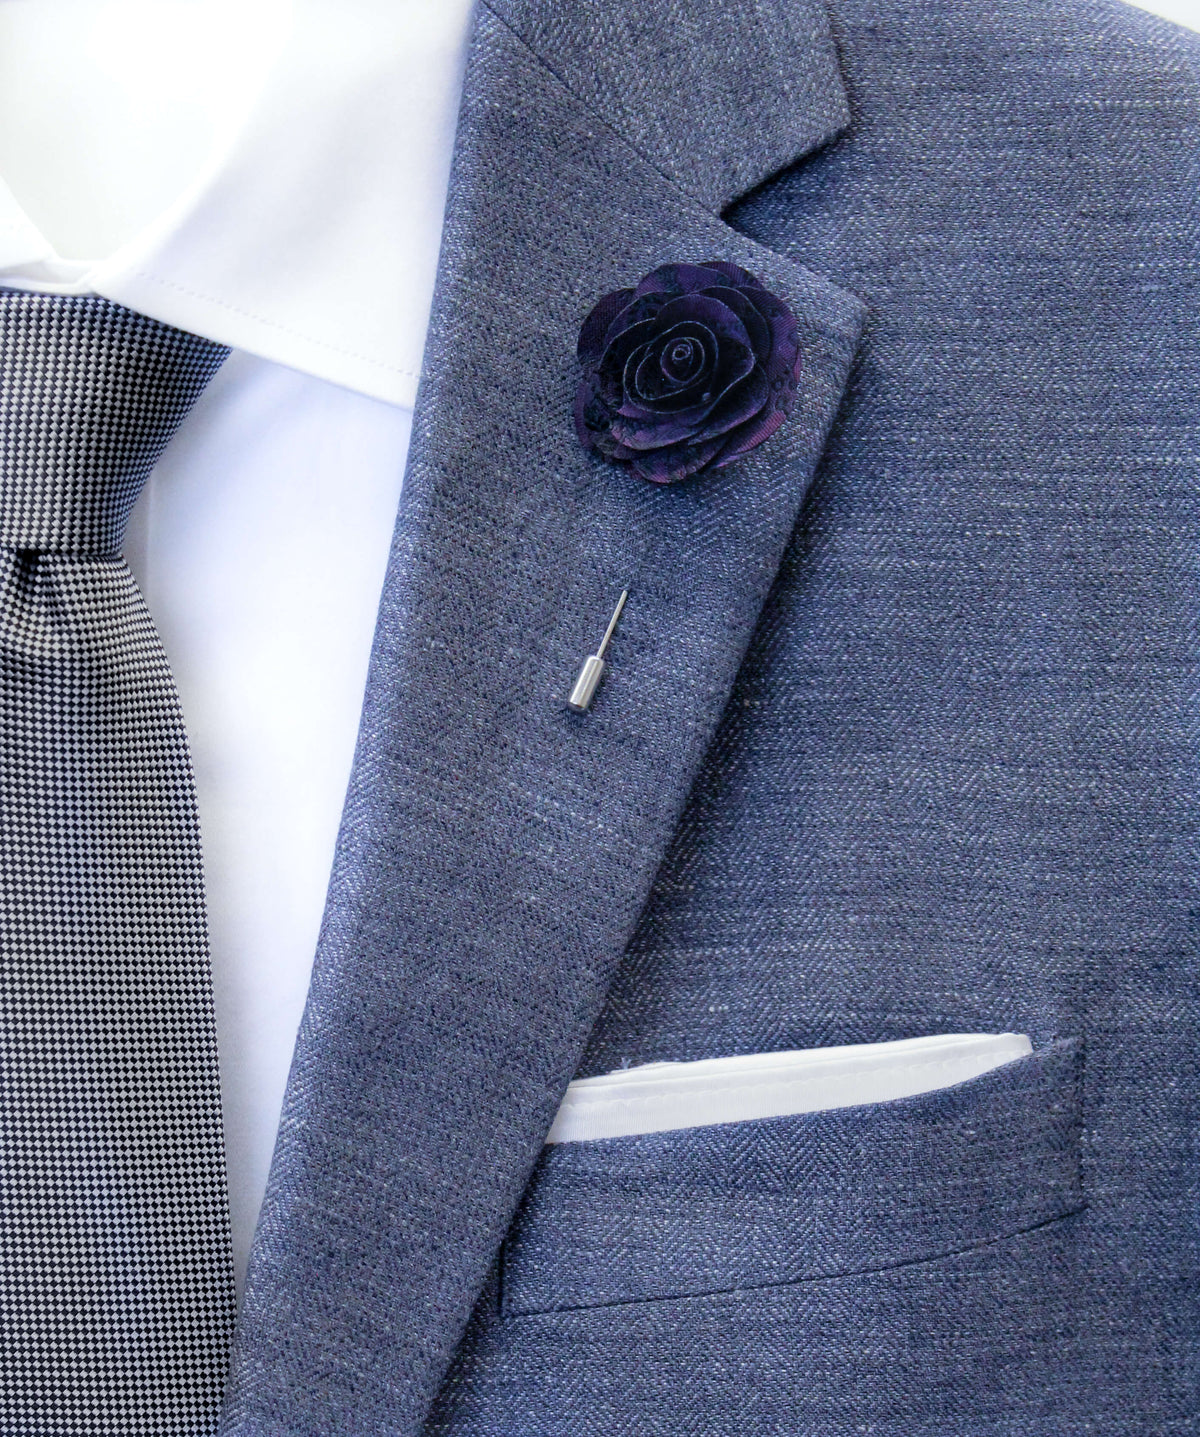 Finest Black and Purple Flower Lapel Pin